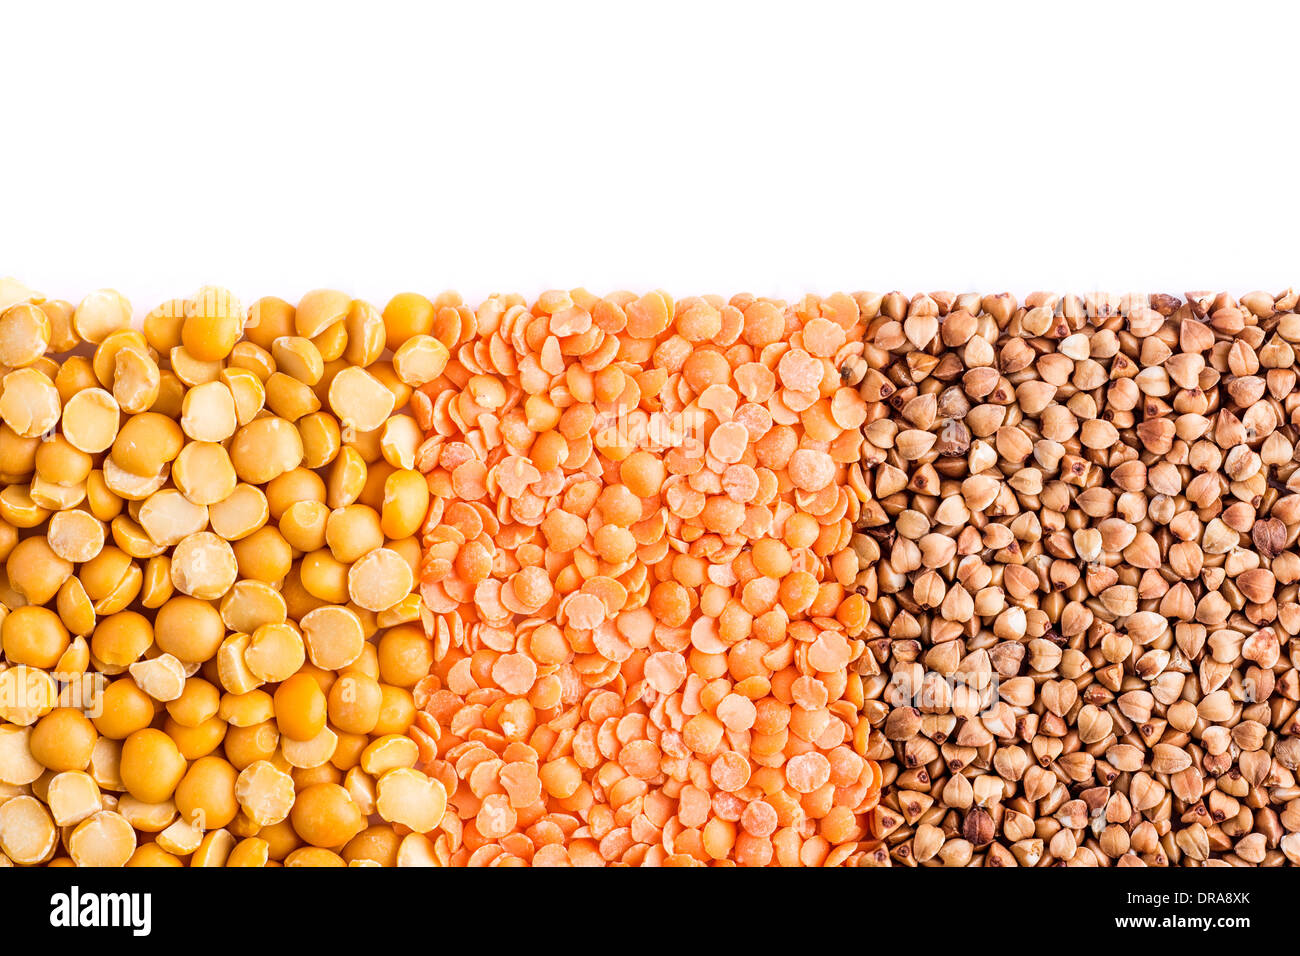 Shredded peas, lentils and buckwheat on white background Stock Photo